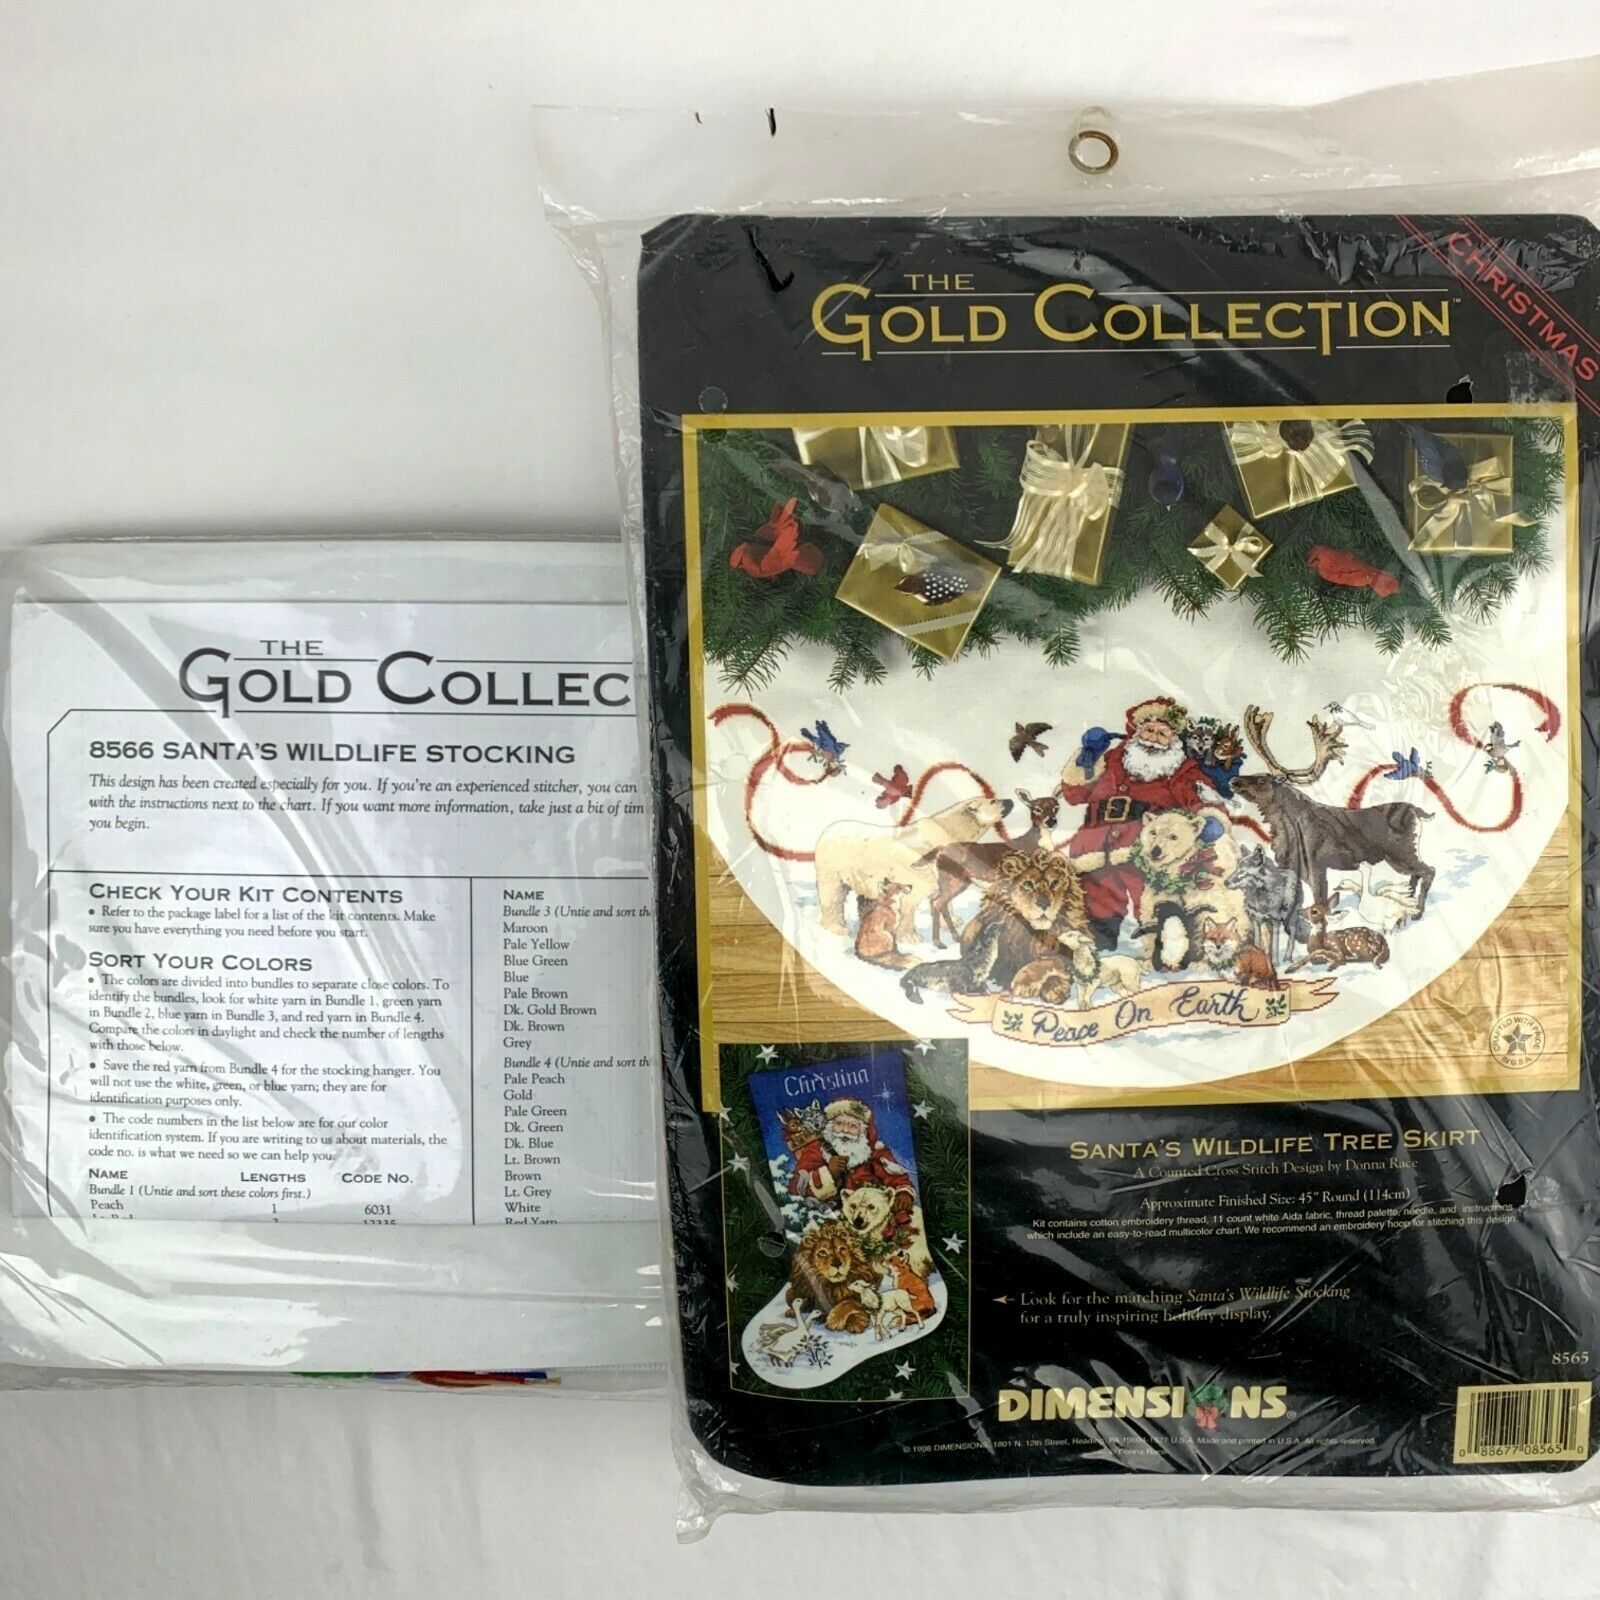 Dimensions Gold Collection Santa's Wildlife Tree Skirt & Stocking Kit 8565 8566 - $220.50